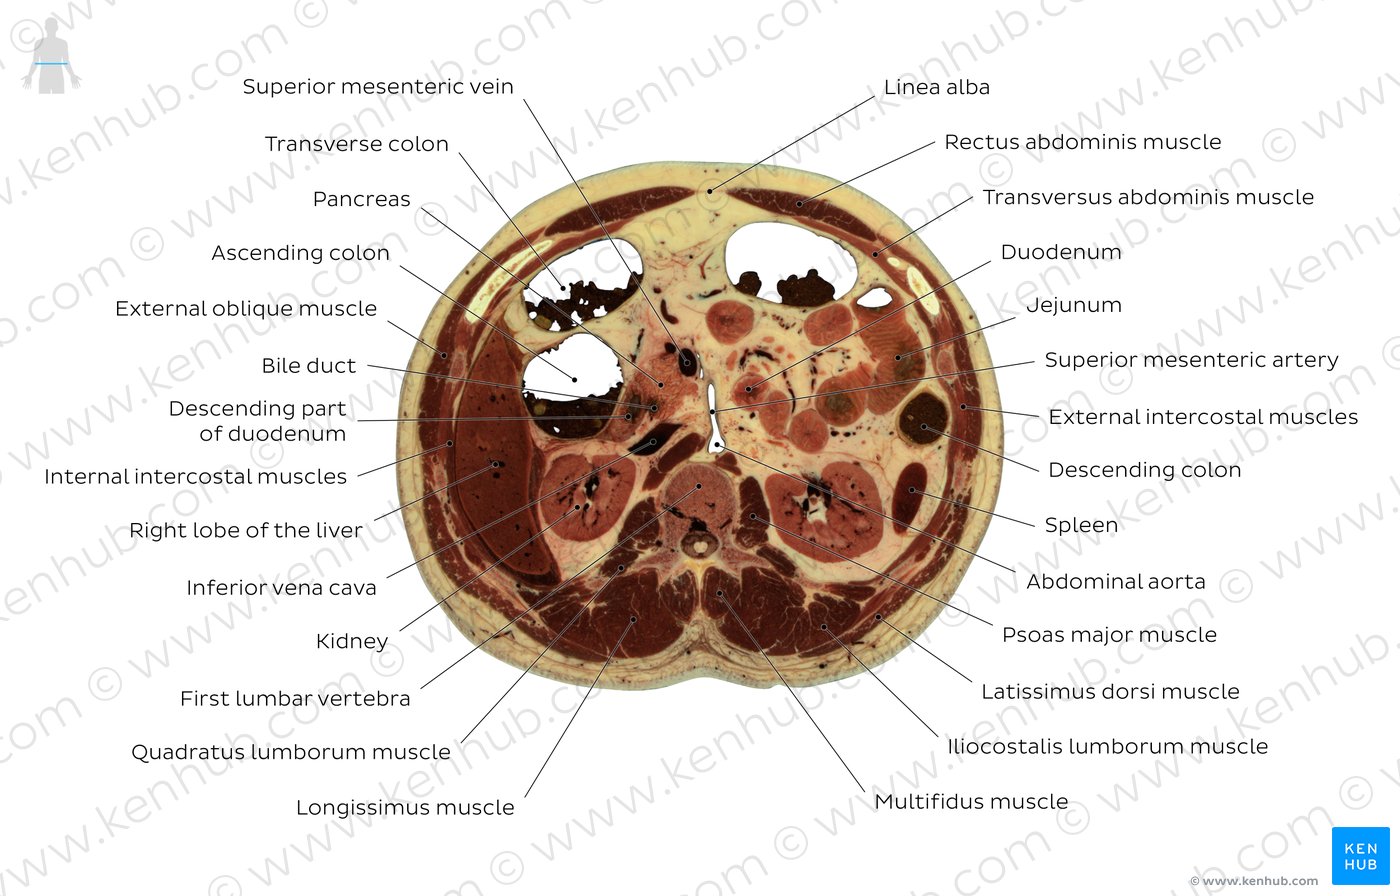 Cross section of the abdomen through L1: Diagram